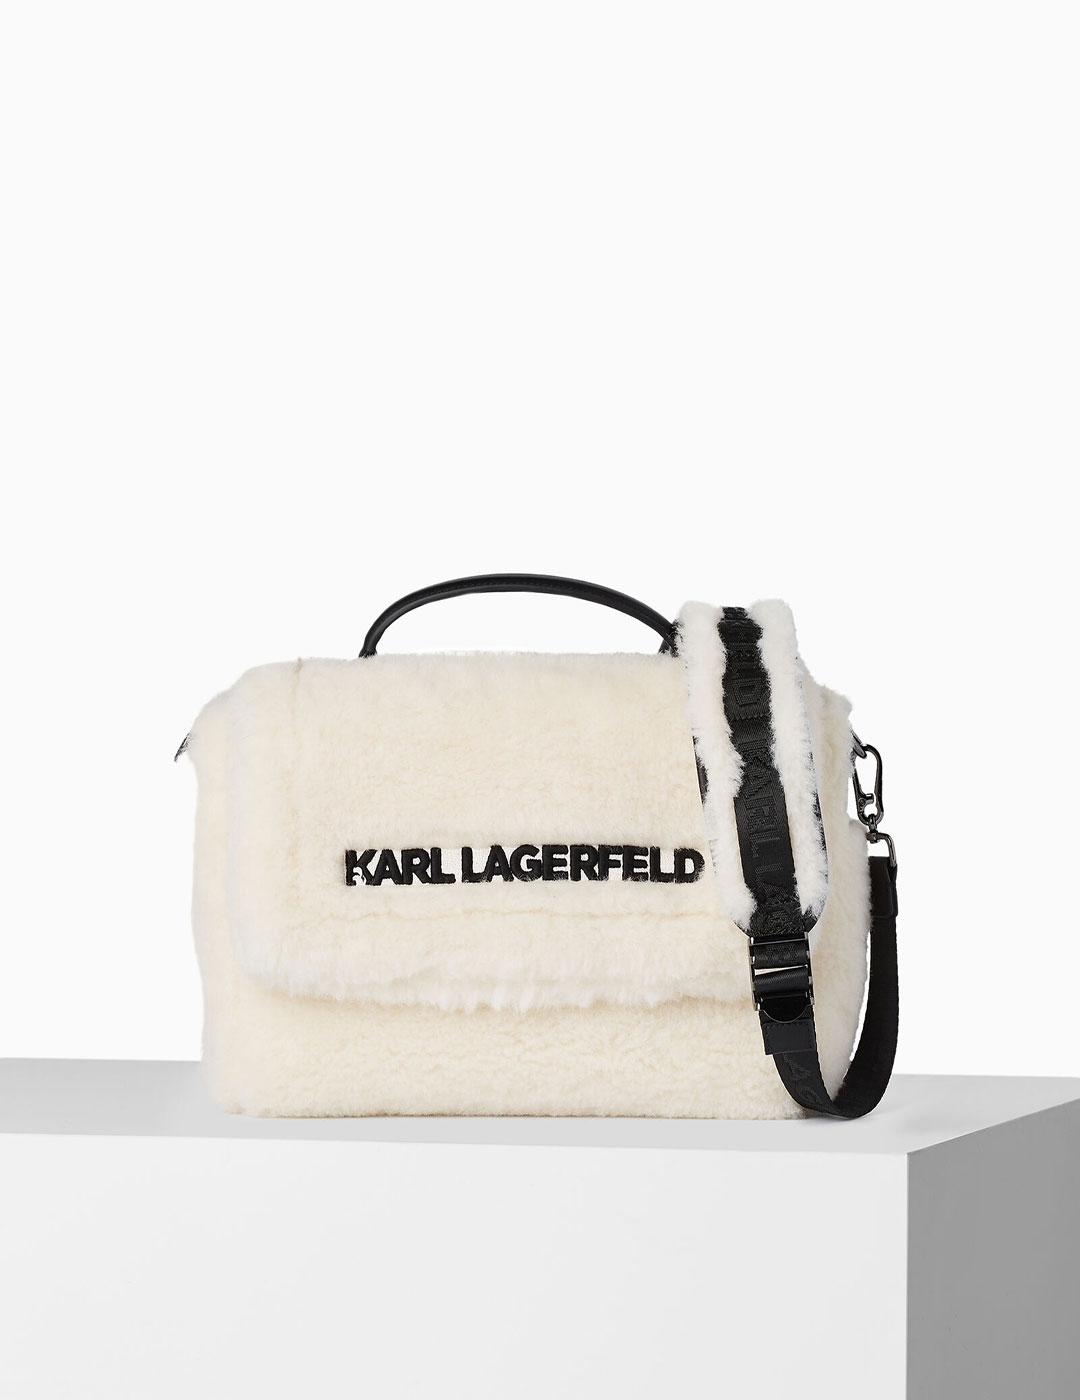 Karl Lagerfeld shearling top handle